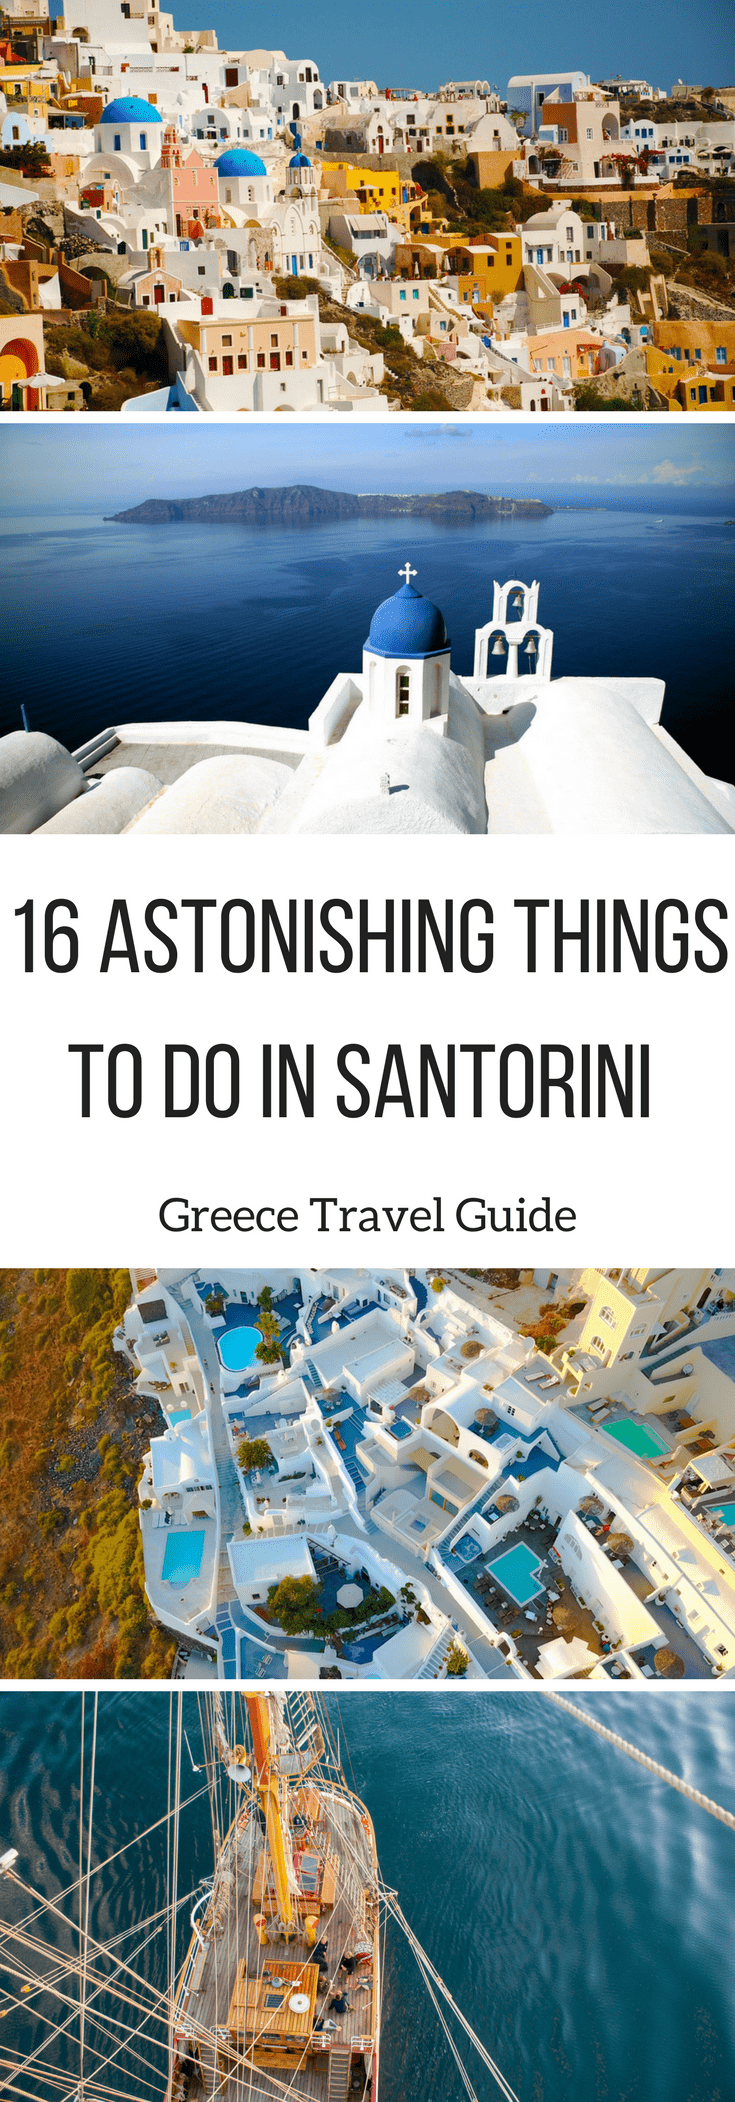 16 Astonishing Things to do in Santorini - Greece Travel Guide